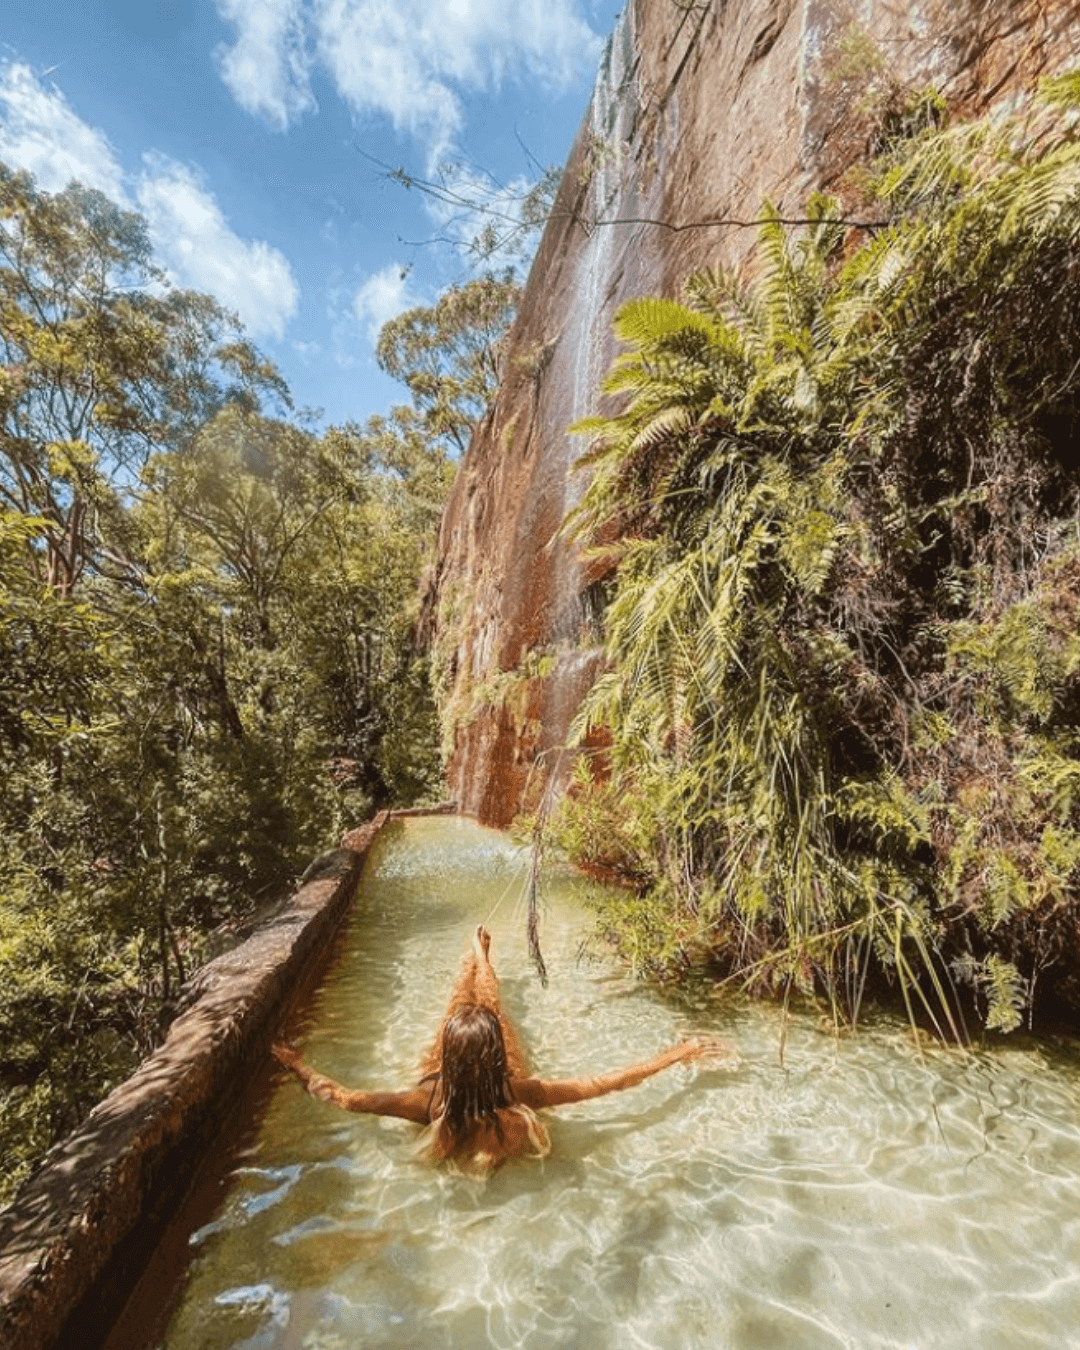 woman bathing in tropical trough below waterfall